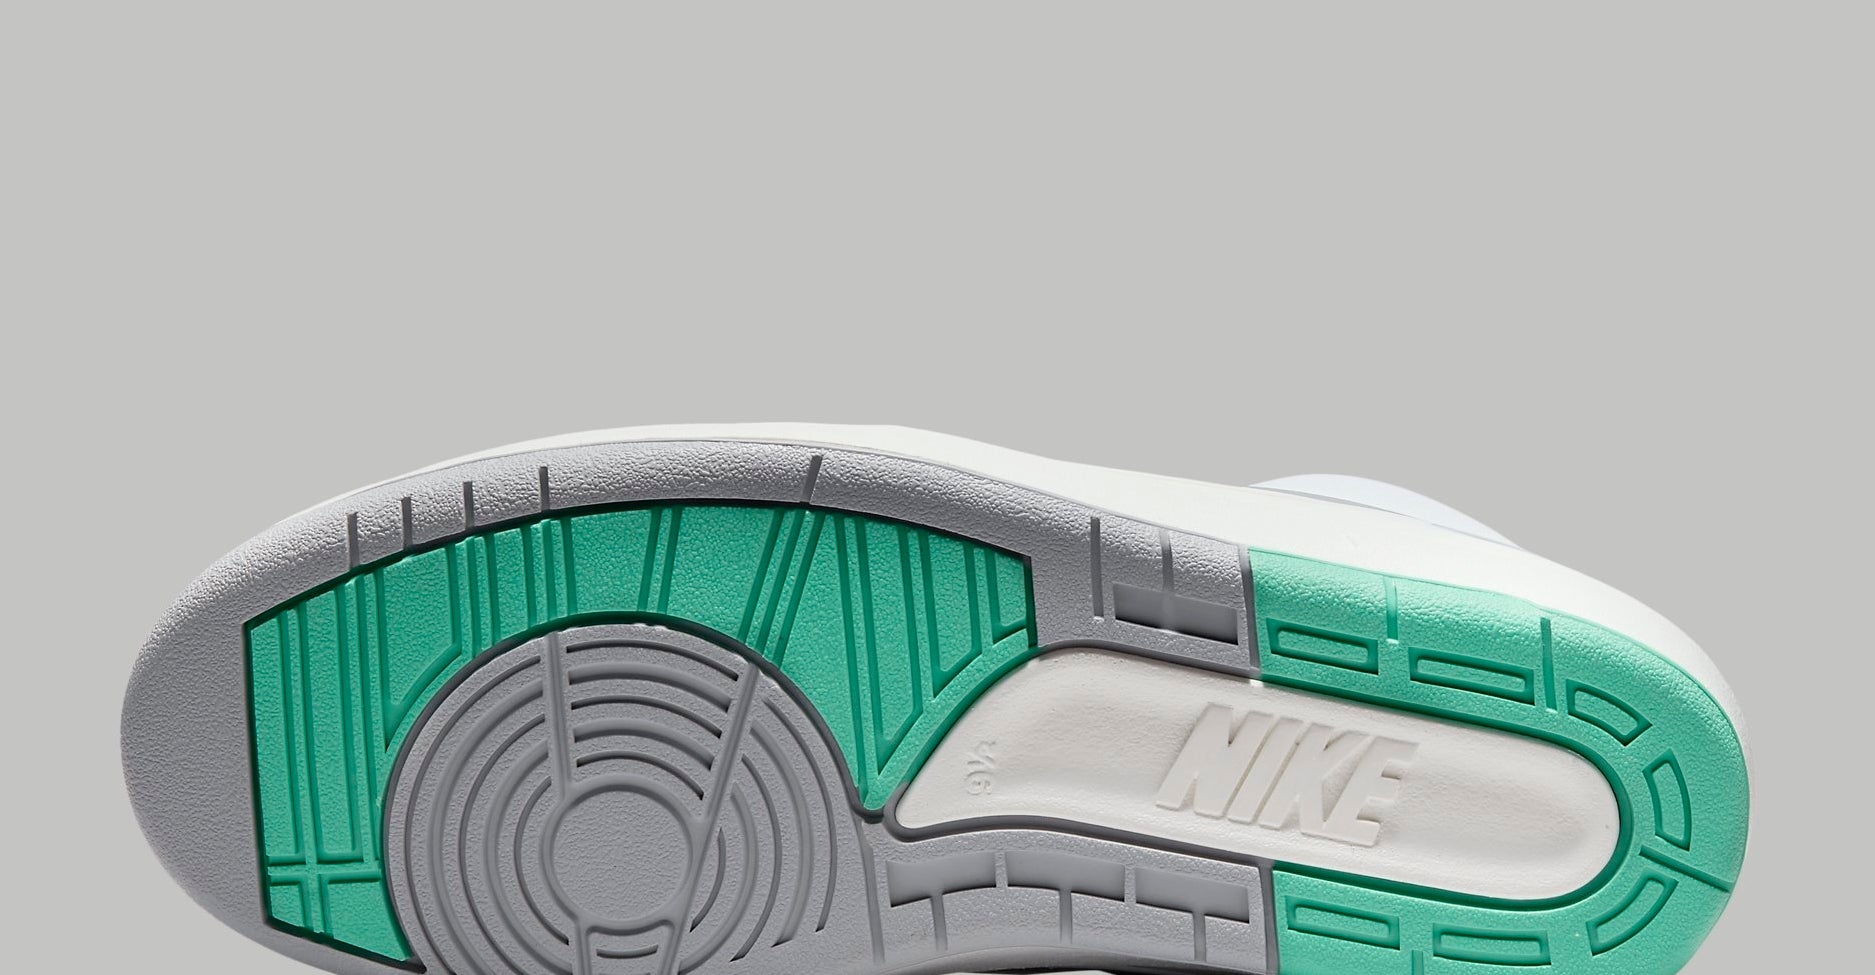 Nike Air Trainer II Crystal Mint Release Date 